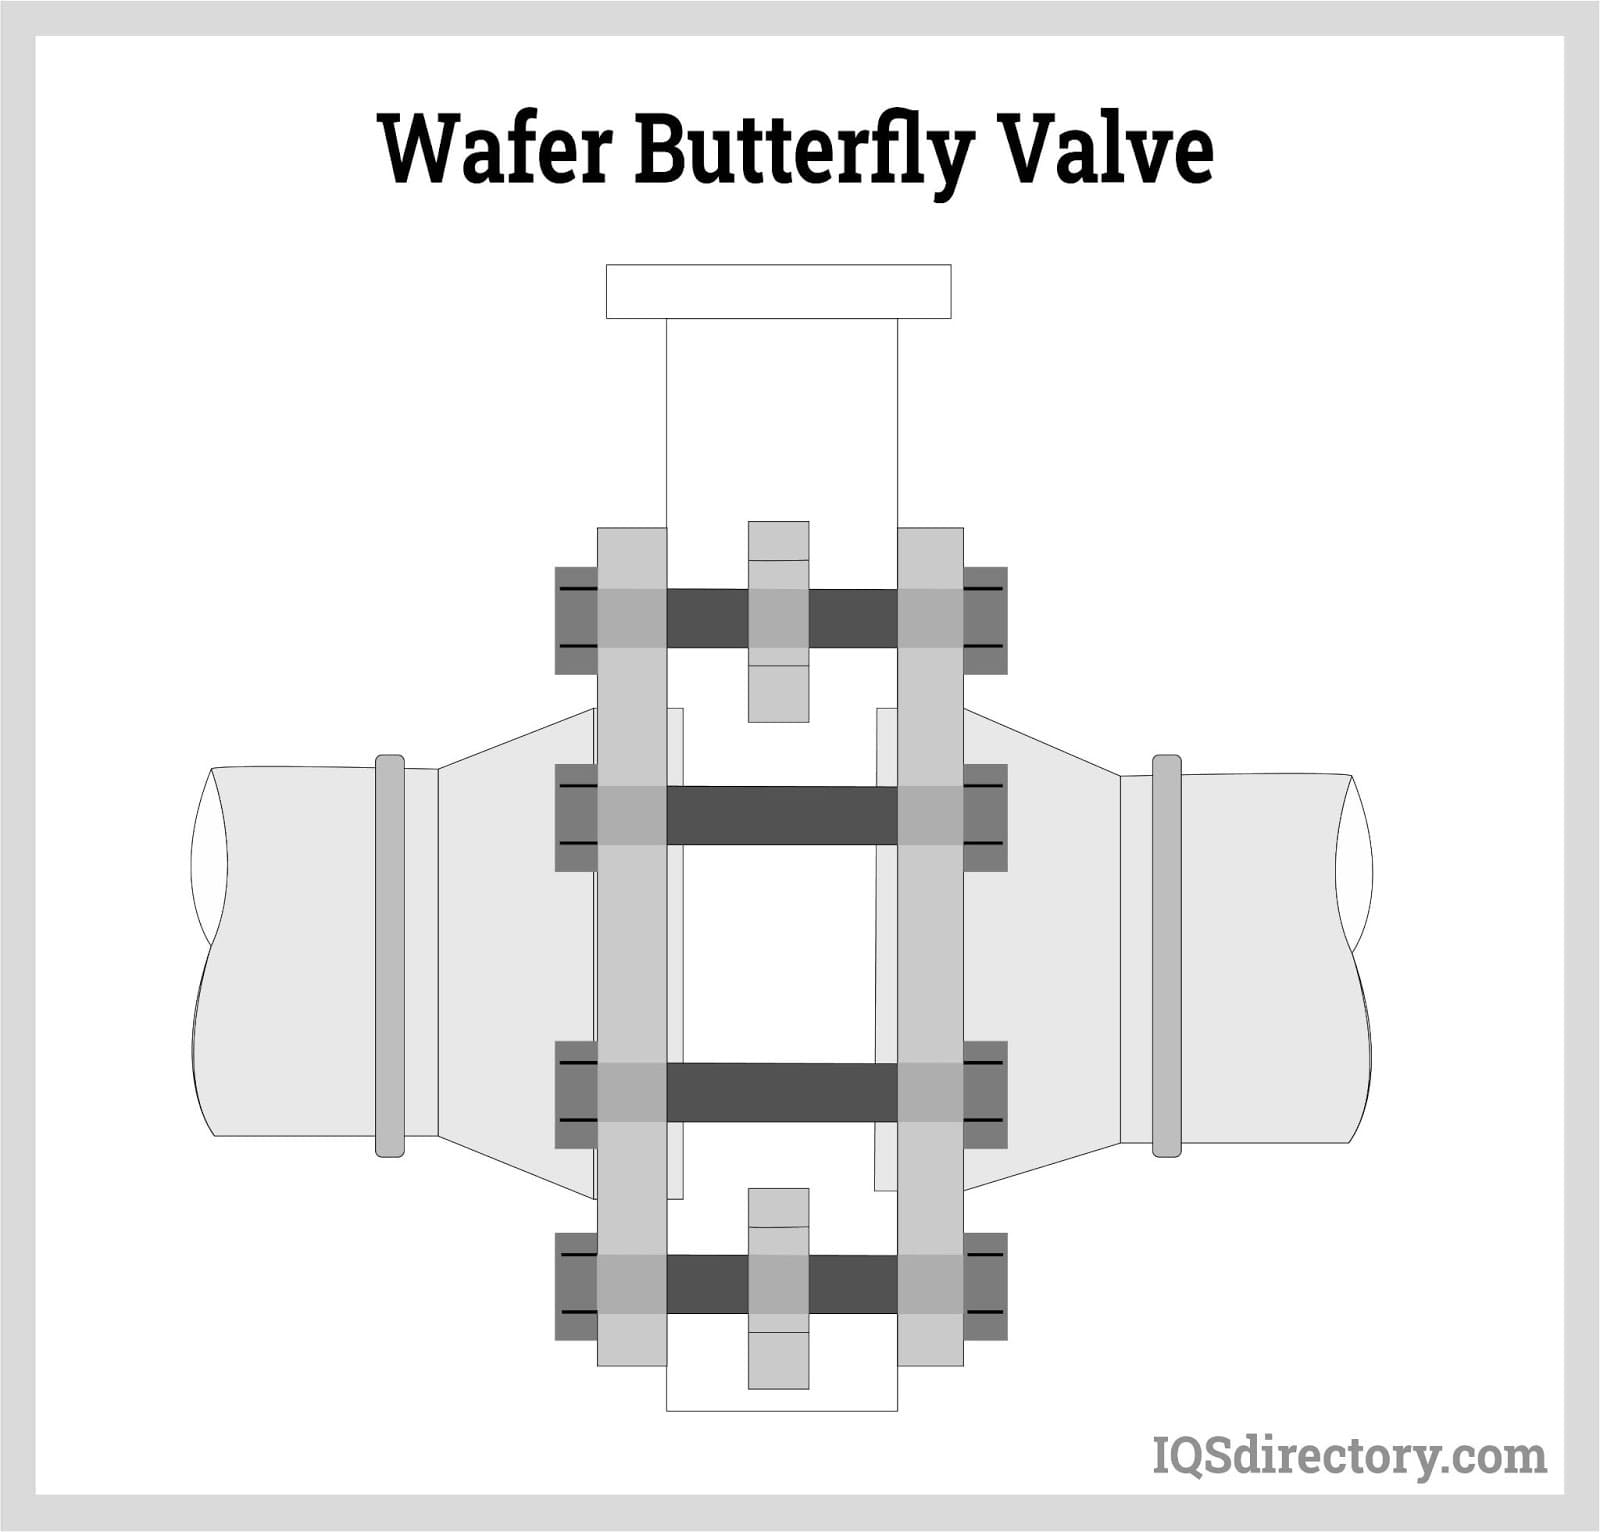 wafer butterfly valves